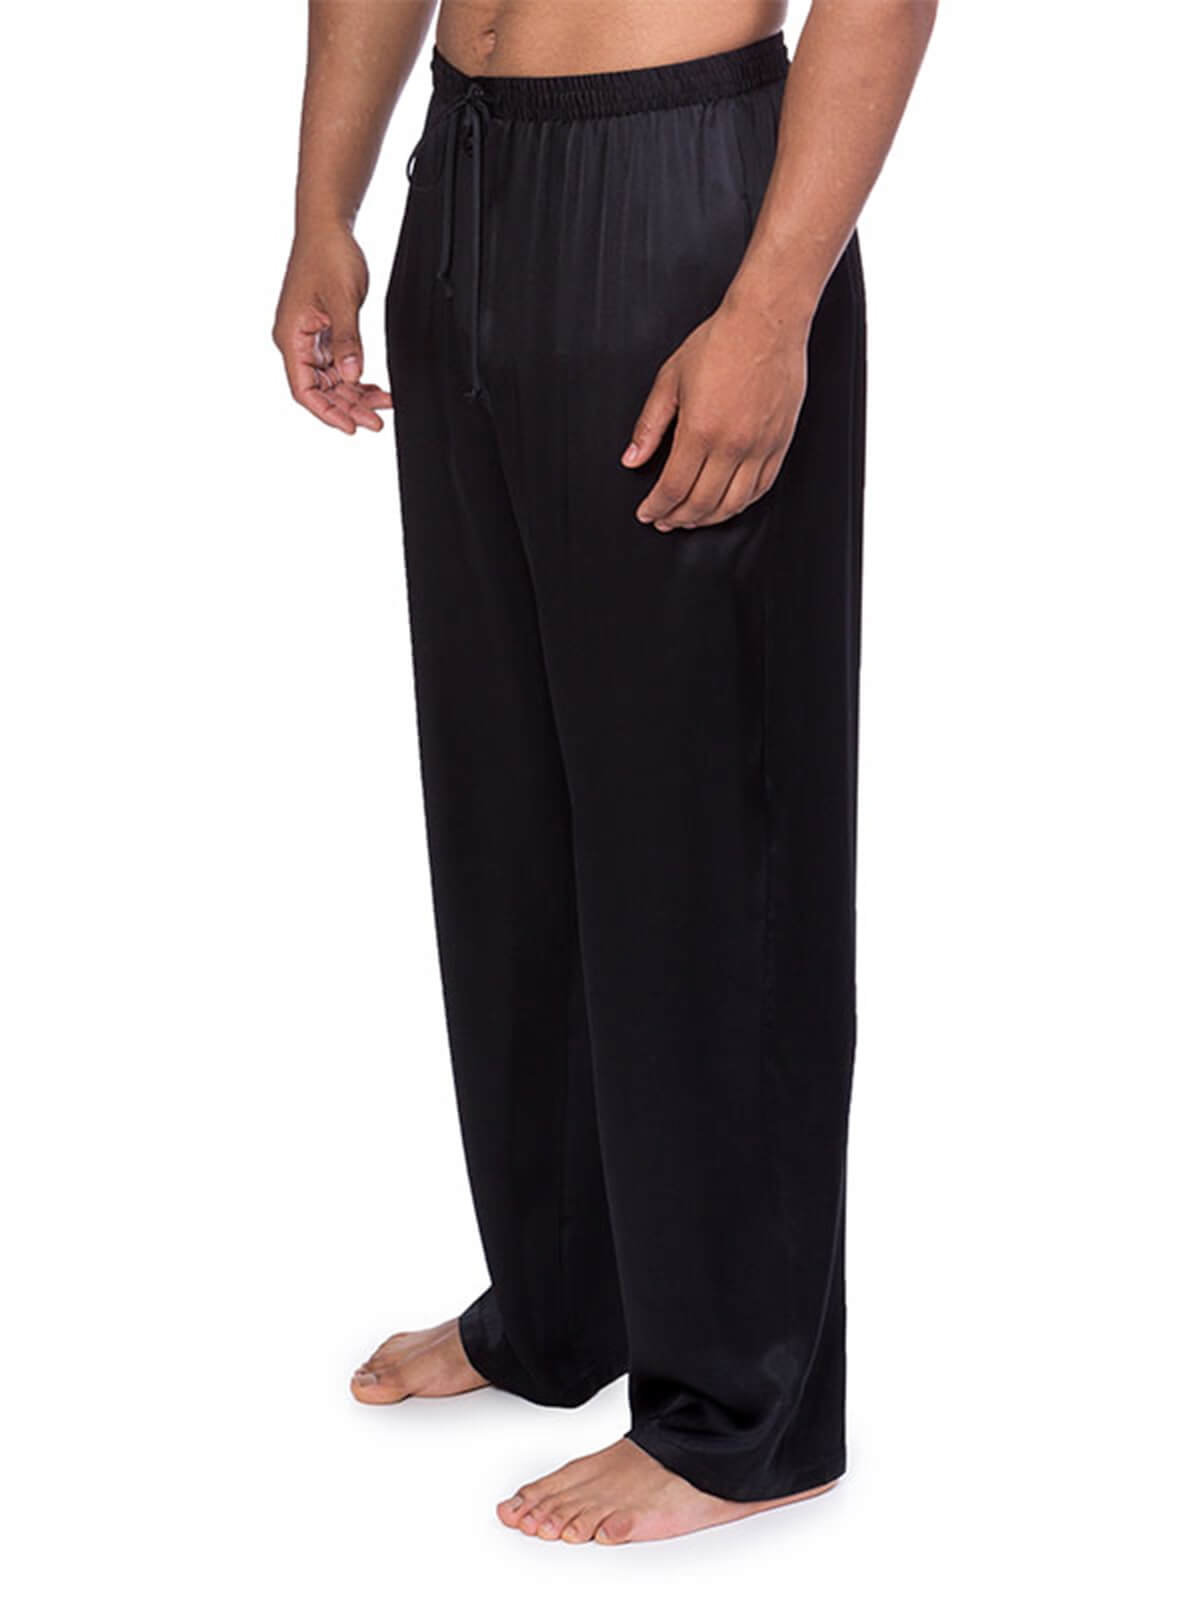 Black - Men's Silk Pajama Pants - XL(37-38)